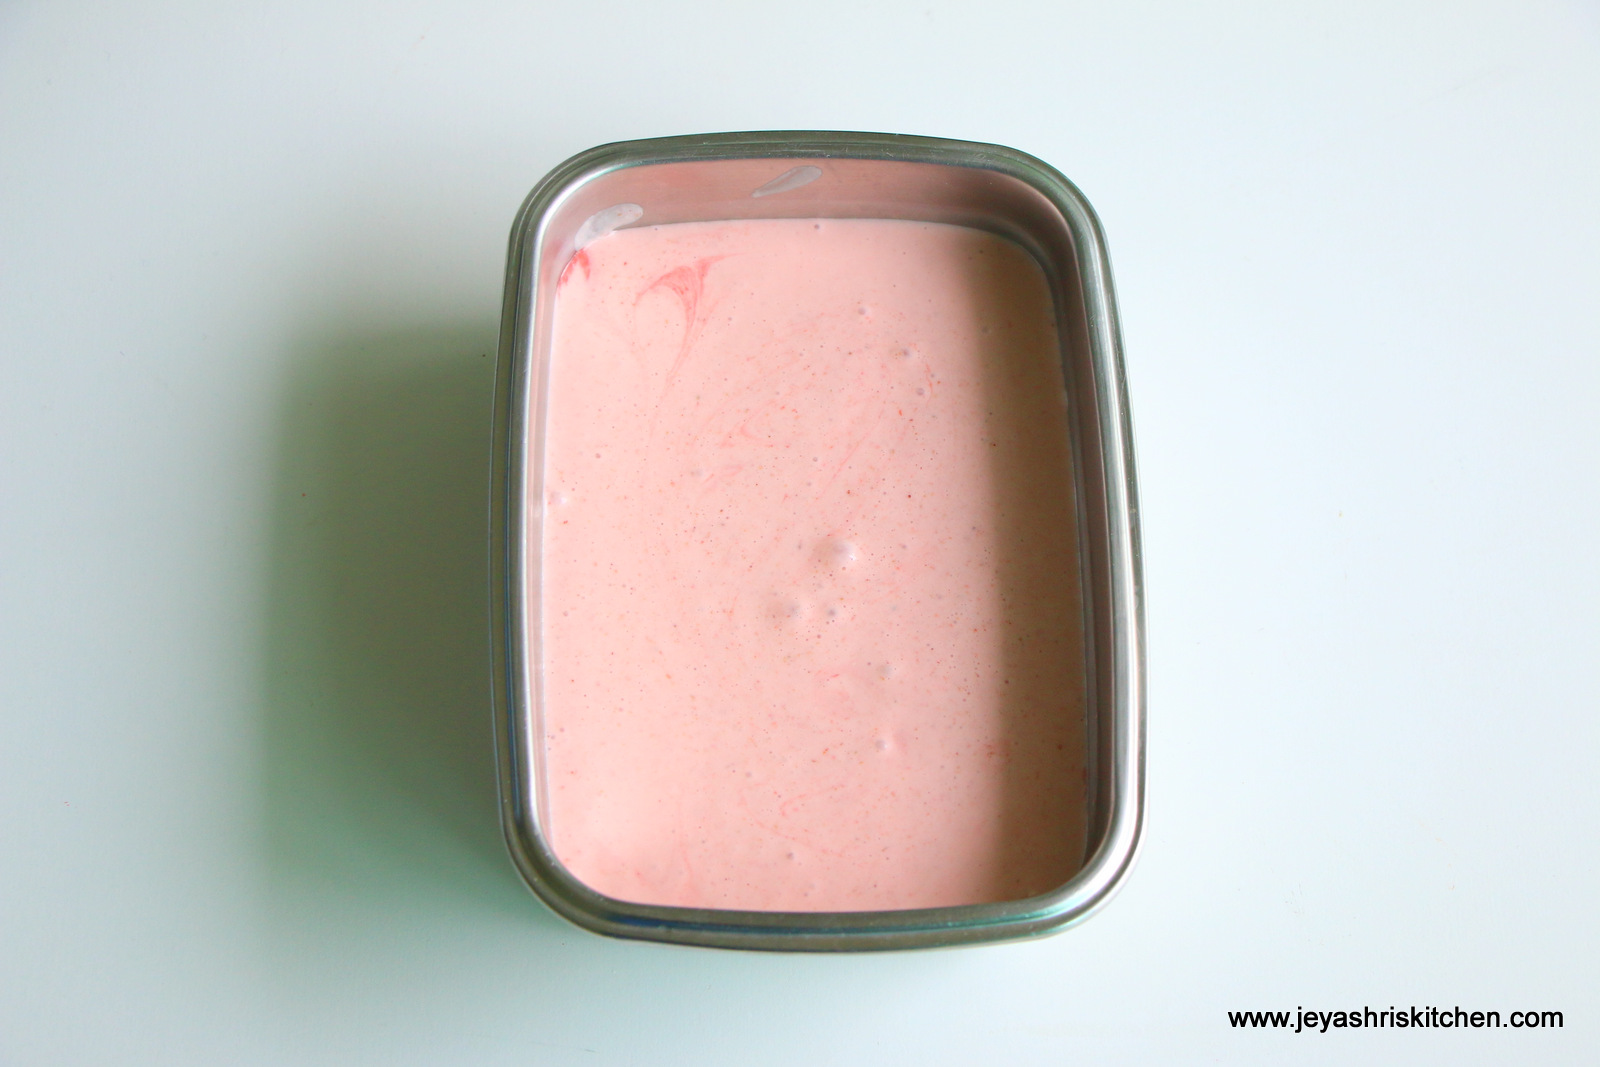 home-made-strawberry-ice-cream-recipe